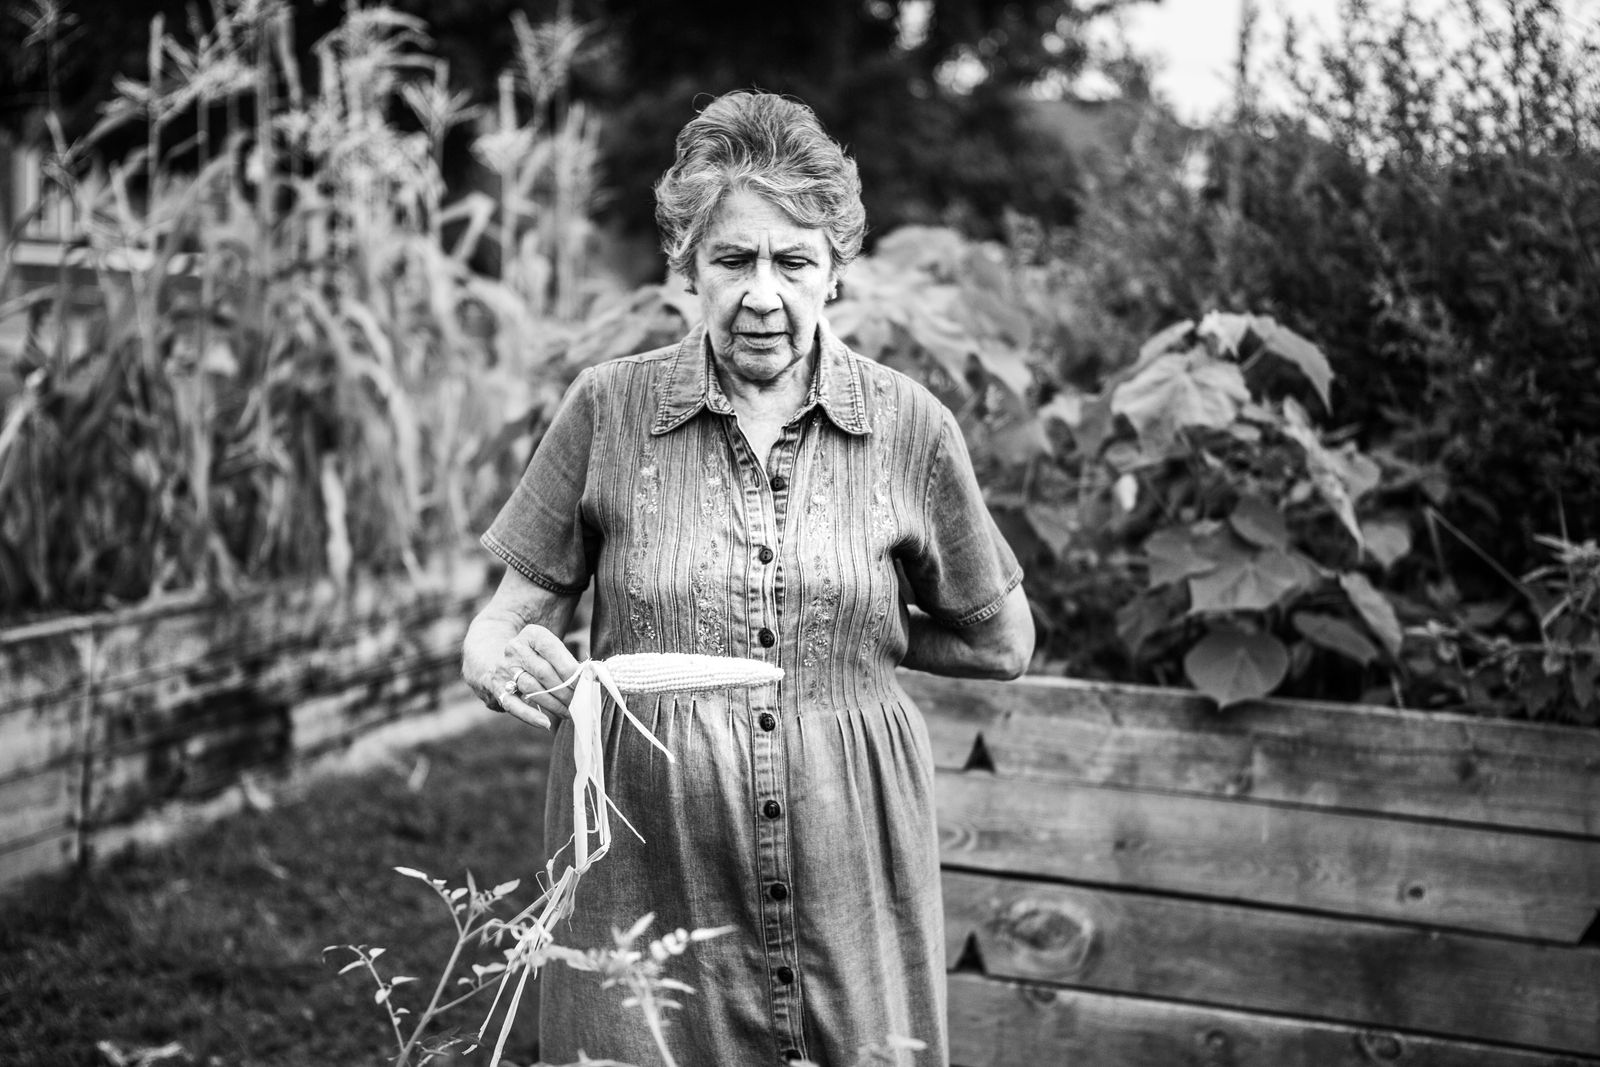 © JANICE MILHEM - Ursula contemplates the progress of her corn crop.